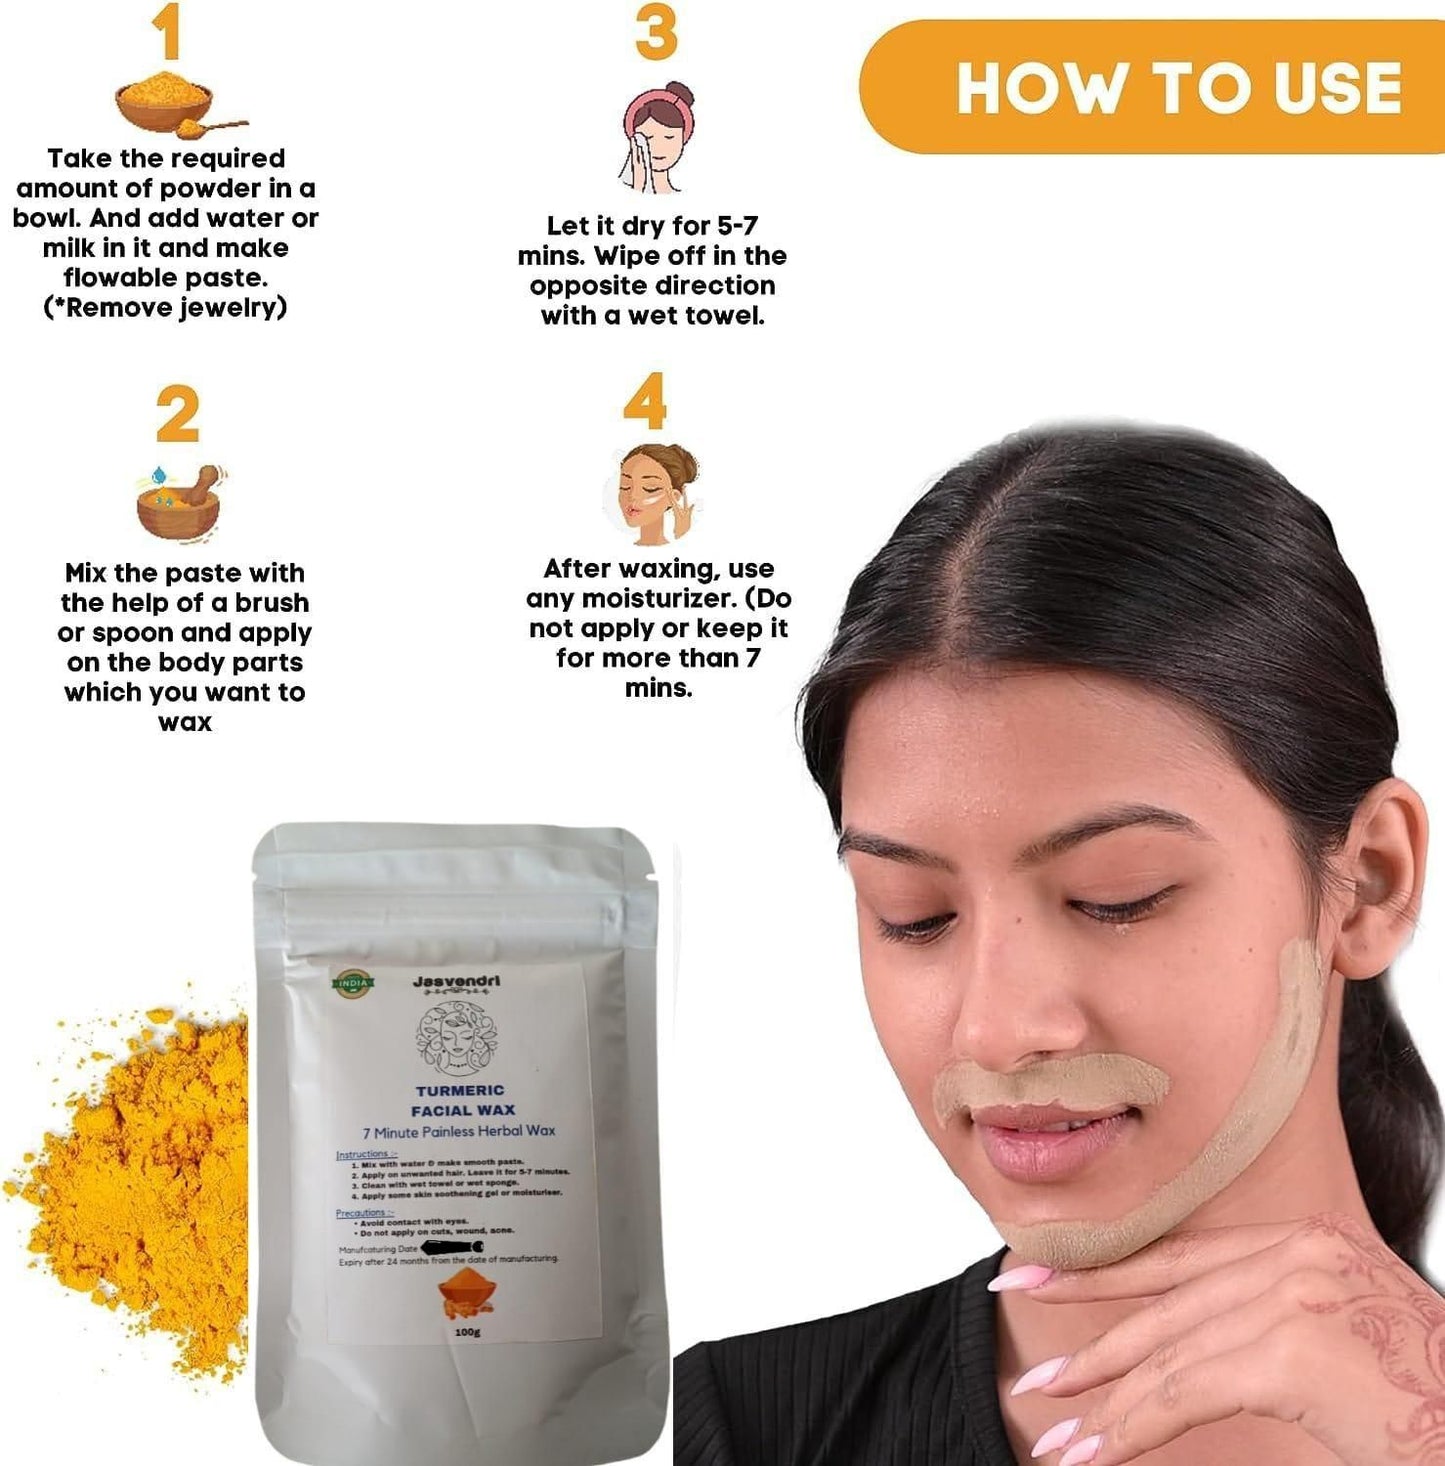 Turmeric Facial Wax - 5 Minutes Painless Herbal Wax Powder